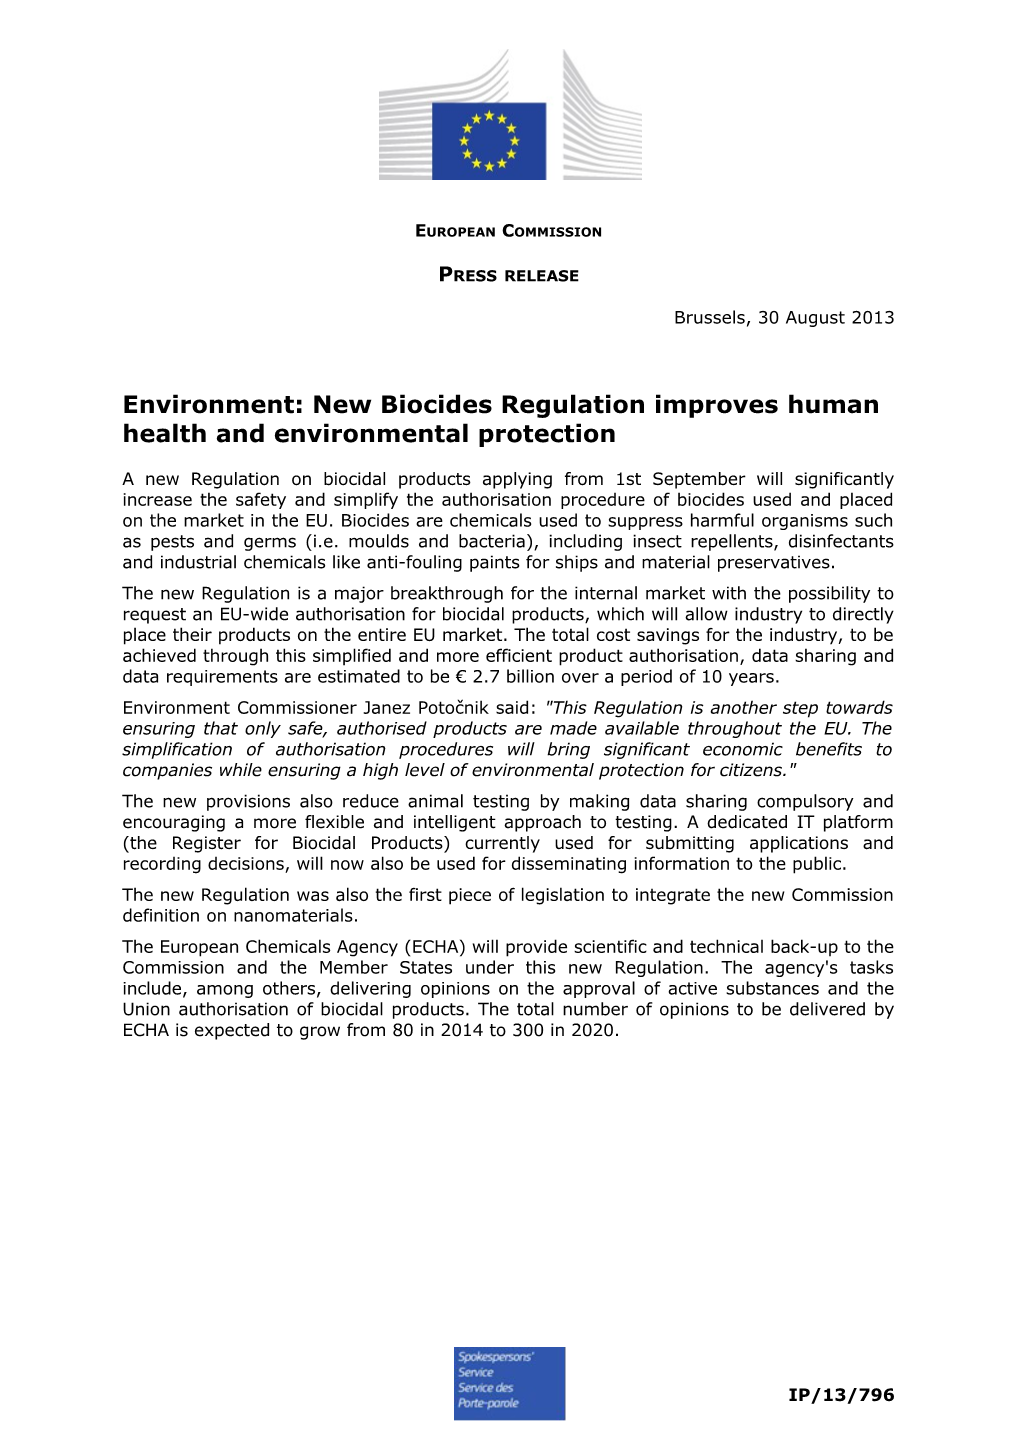 Environment: New Biocides Regulation Improveshuman Health and Environmental Protection